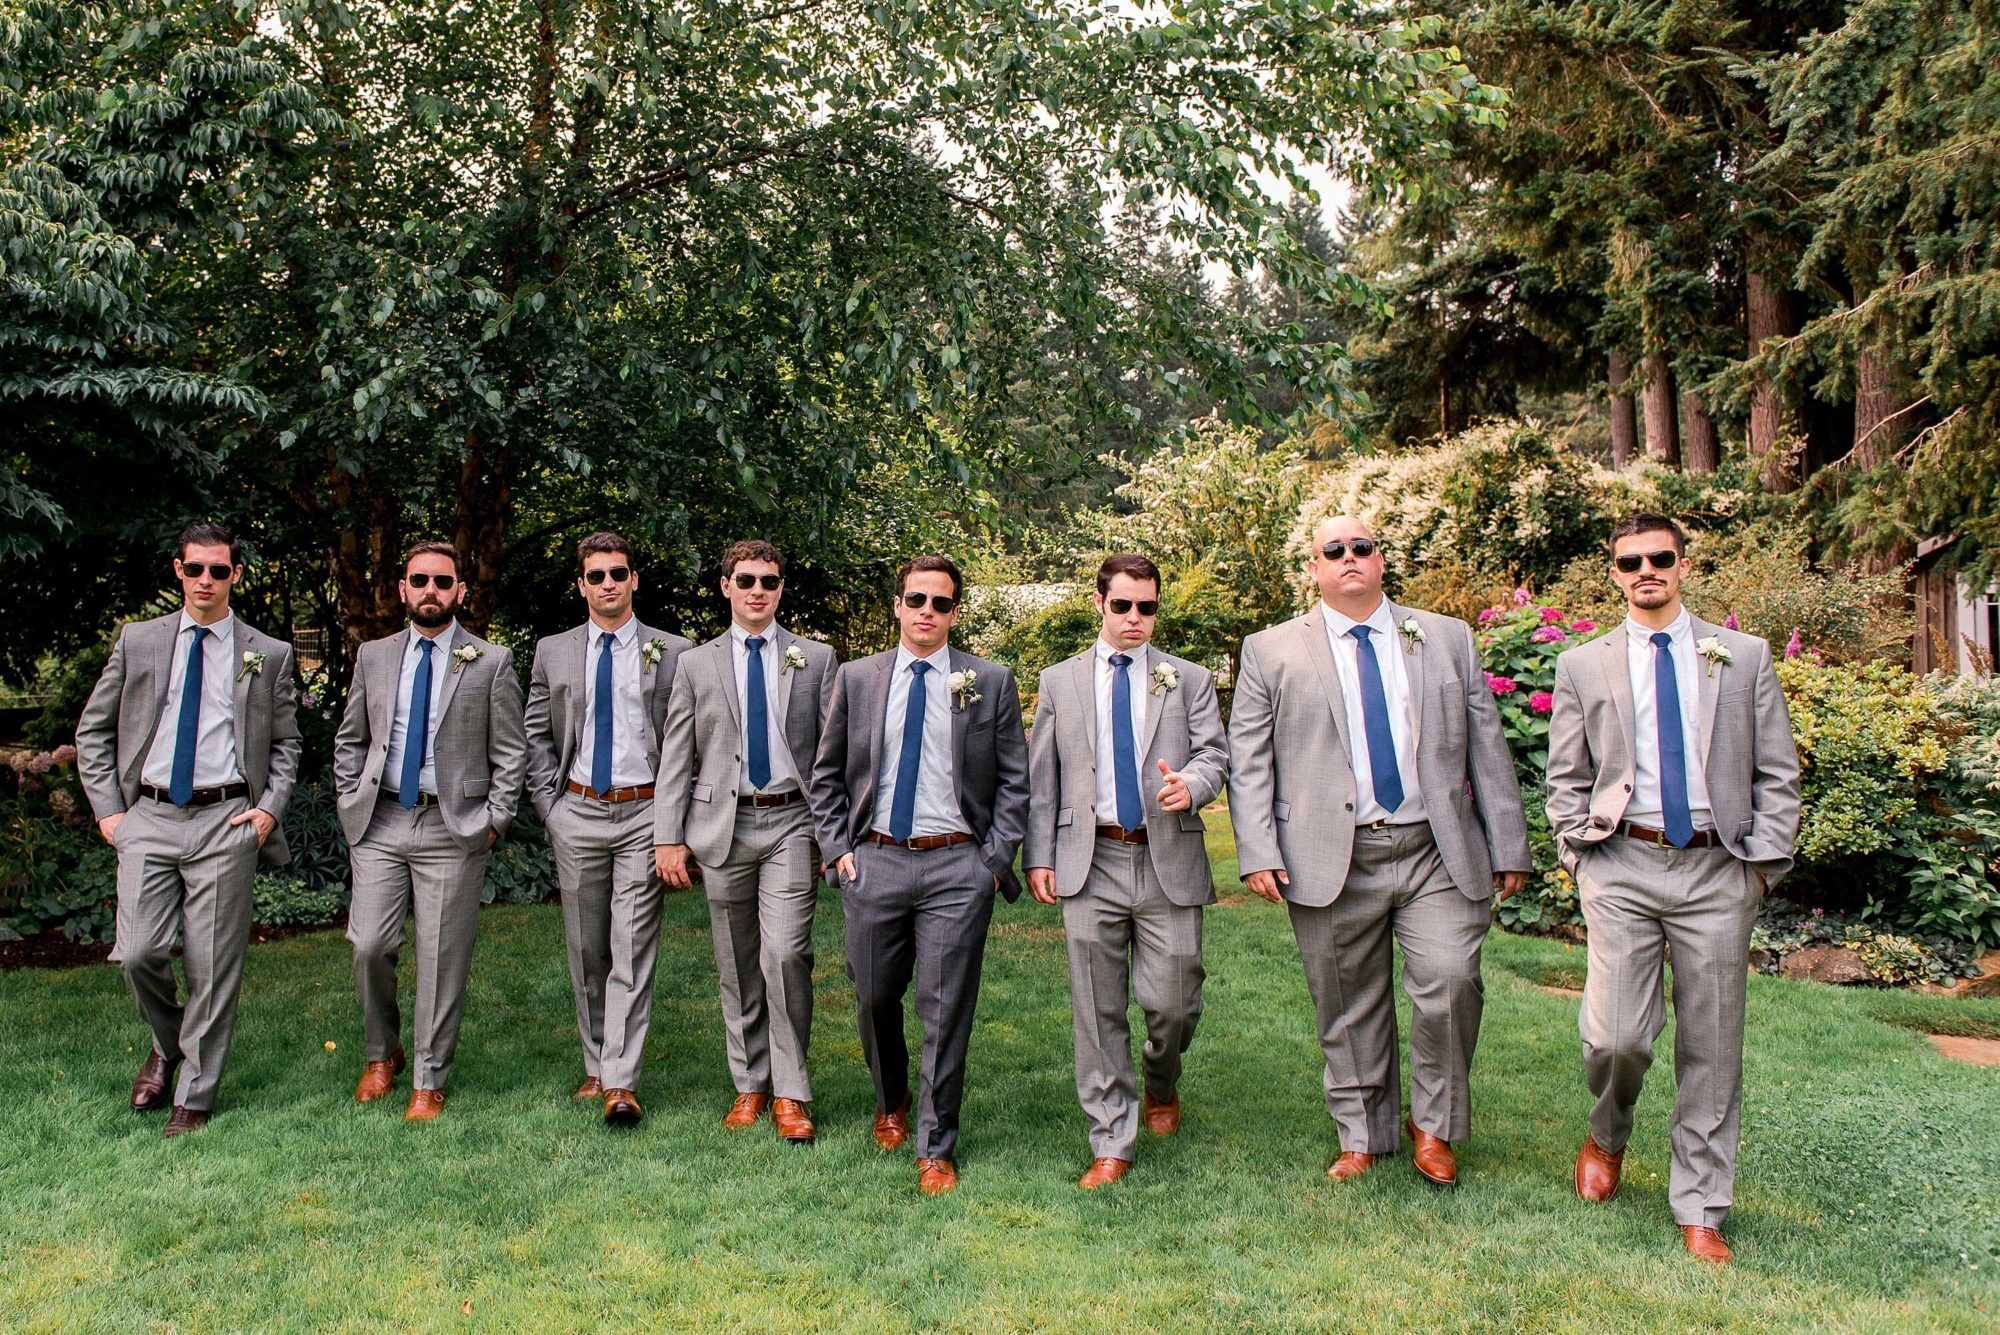 Groom and his groomsmen wearing sunglasses while walking through garden